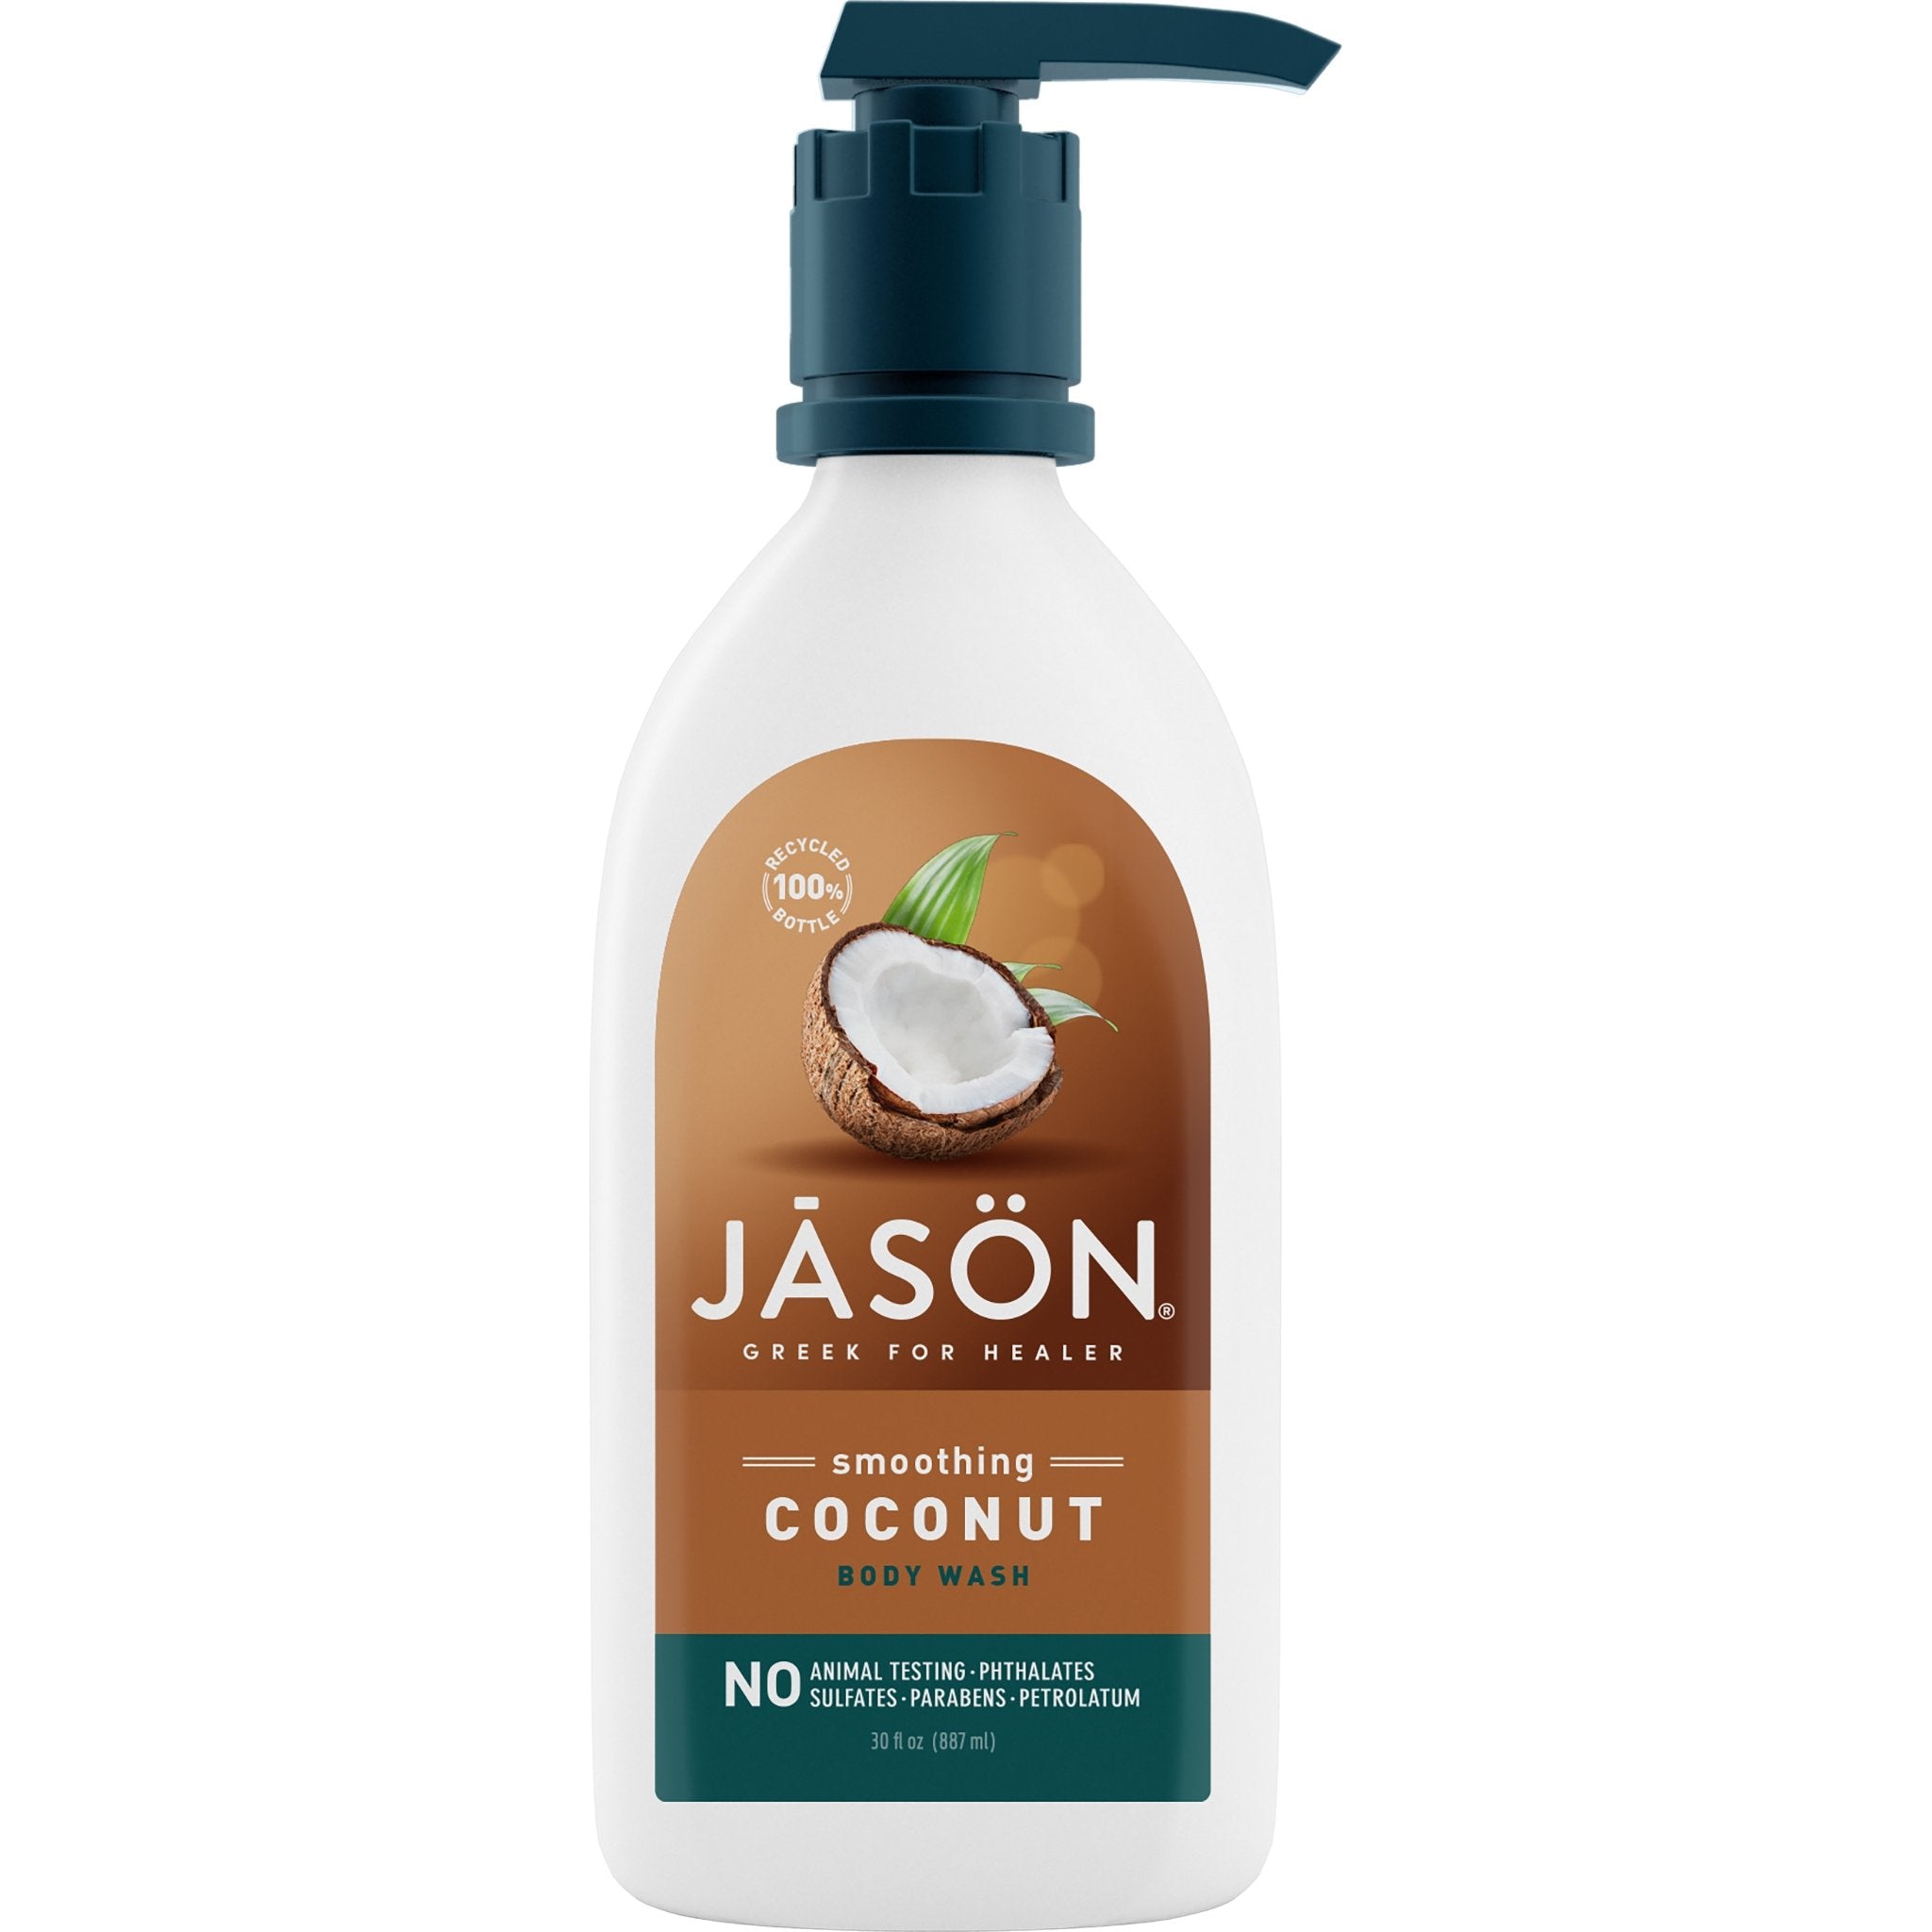 Smoothing Coconut Body Wash - mypure.co.uk